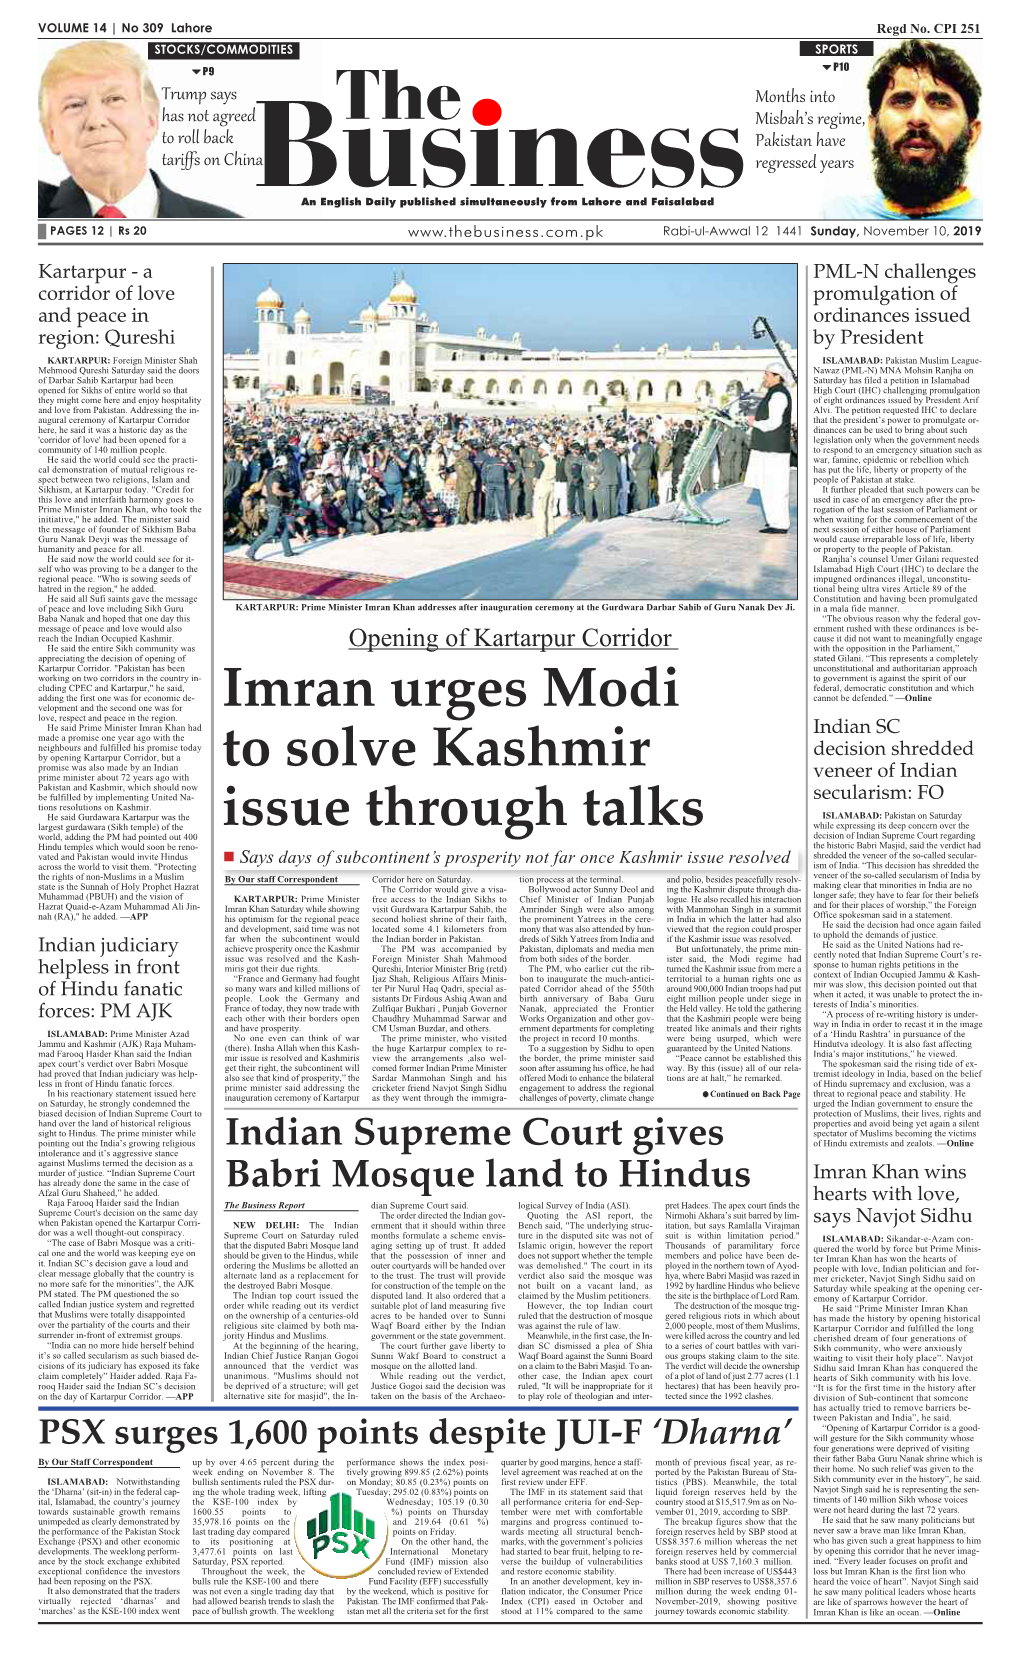 Imran Urges Modi to Solve Kashmir Issue Through Talks